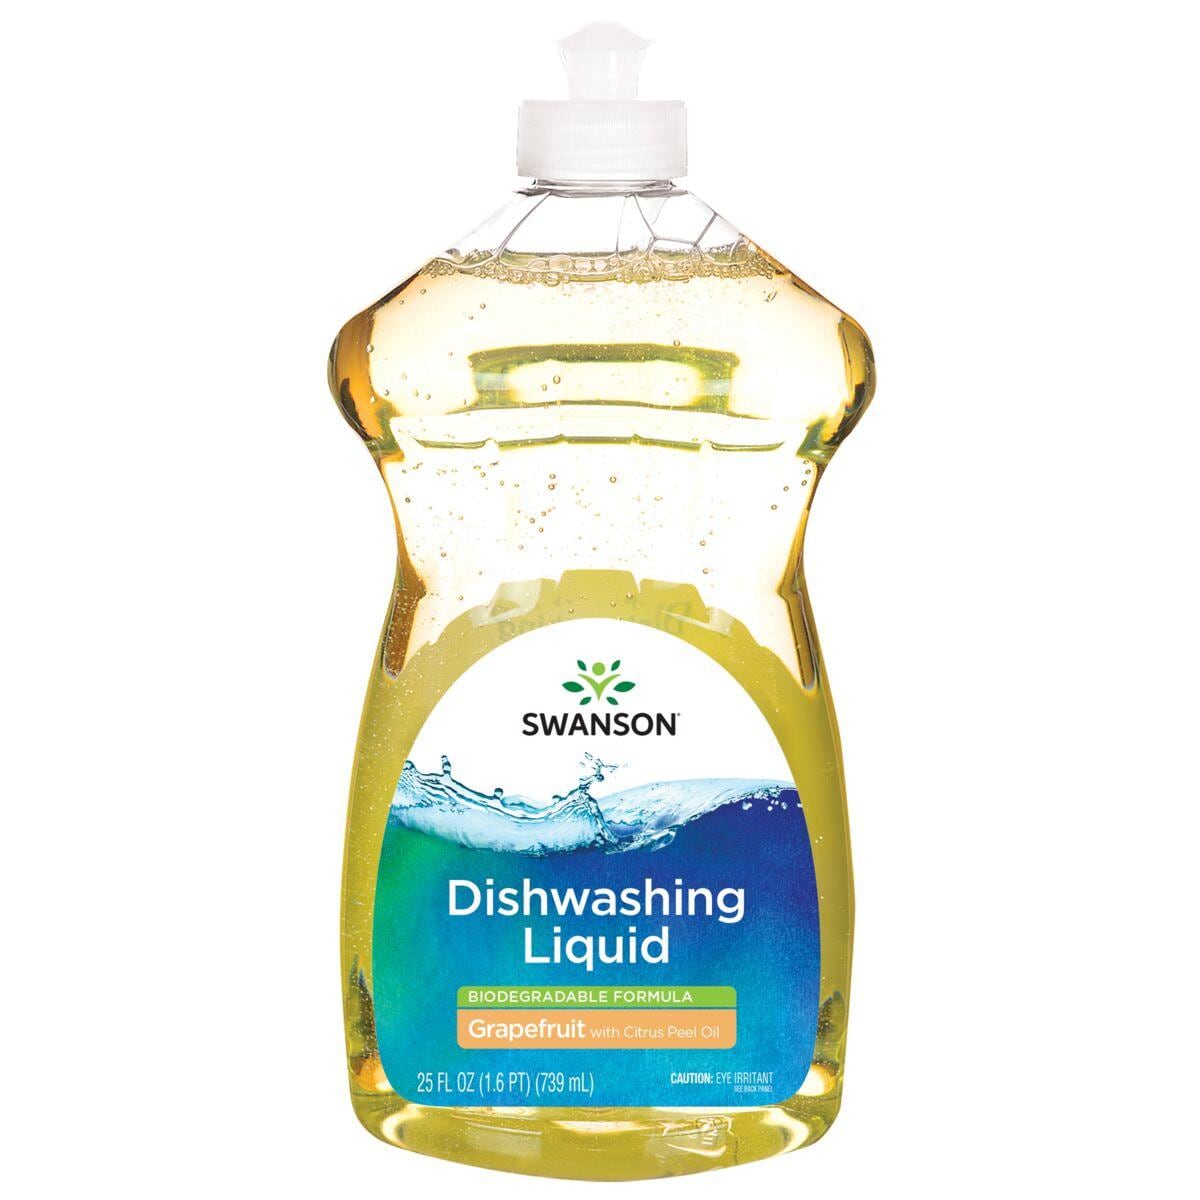 Swanson Healthy Home Dishwashing Liquid - Biodegradable Formula Grapefruit 25 fl oz Liquid